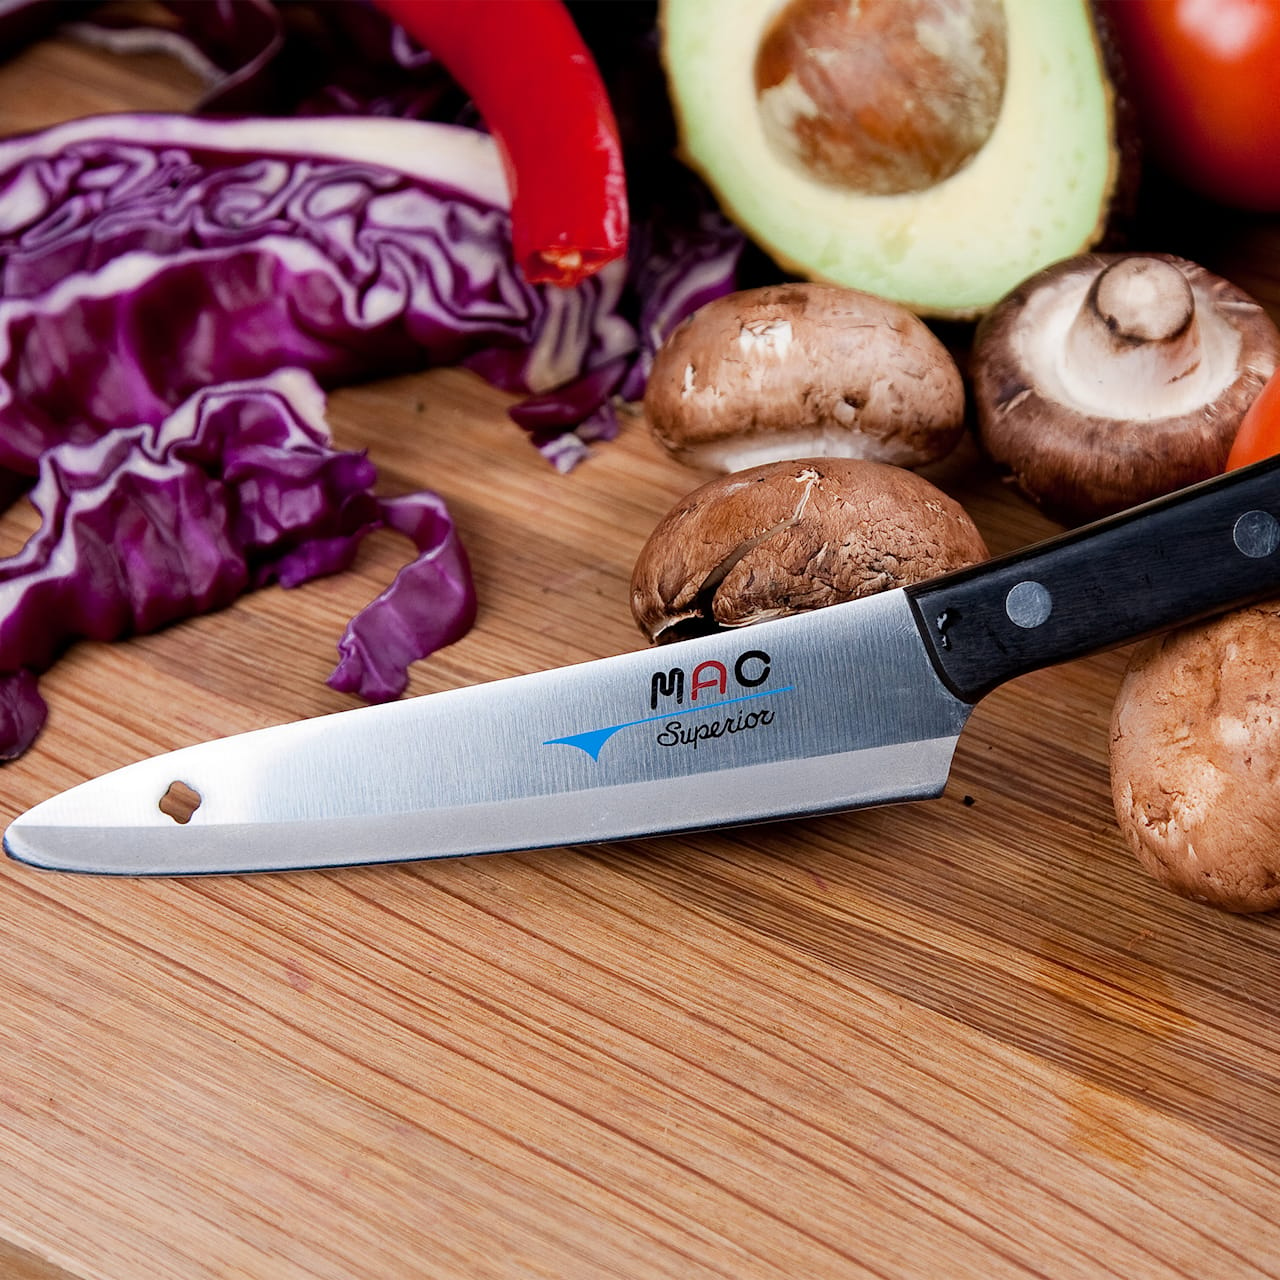 Superior - Vegetable knife, 12.5 cm